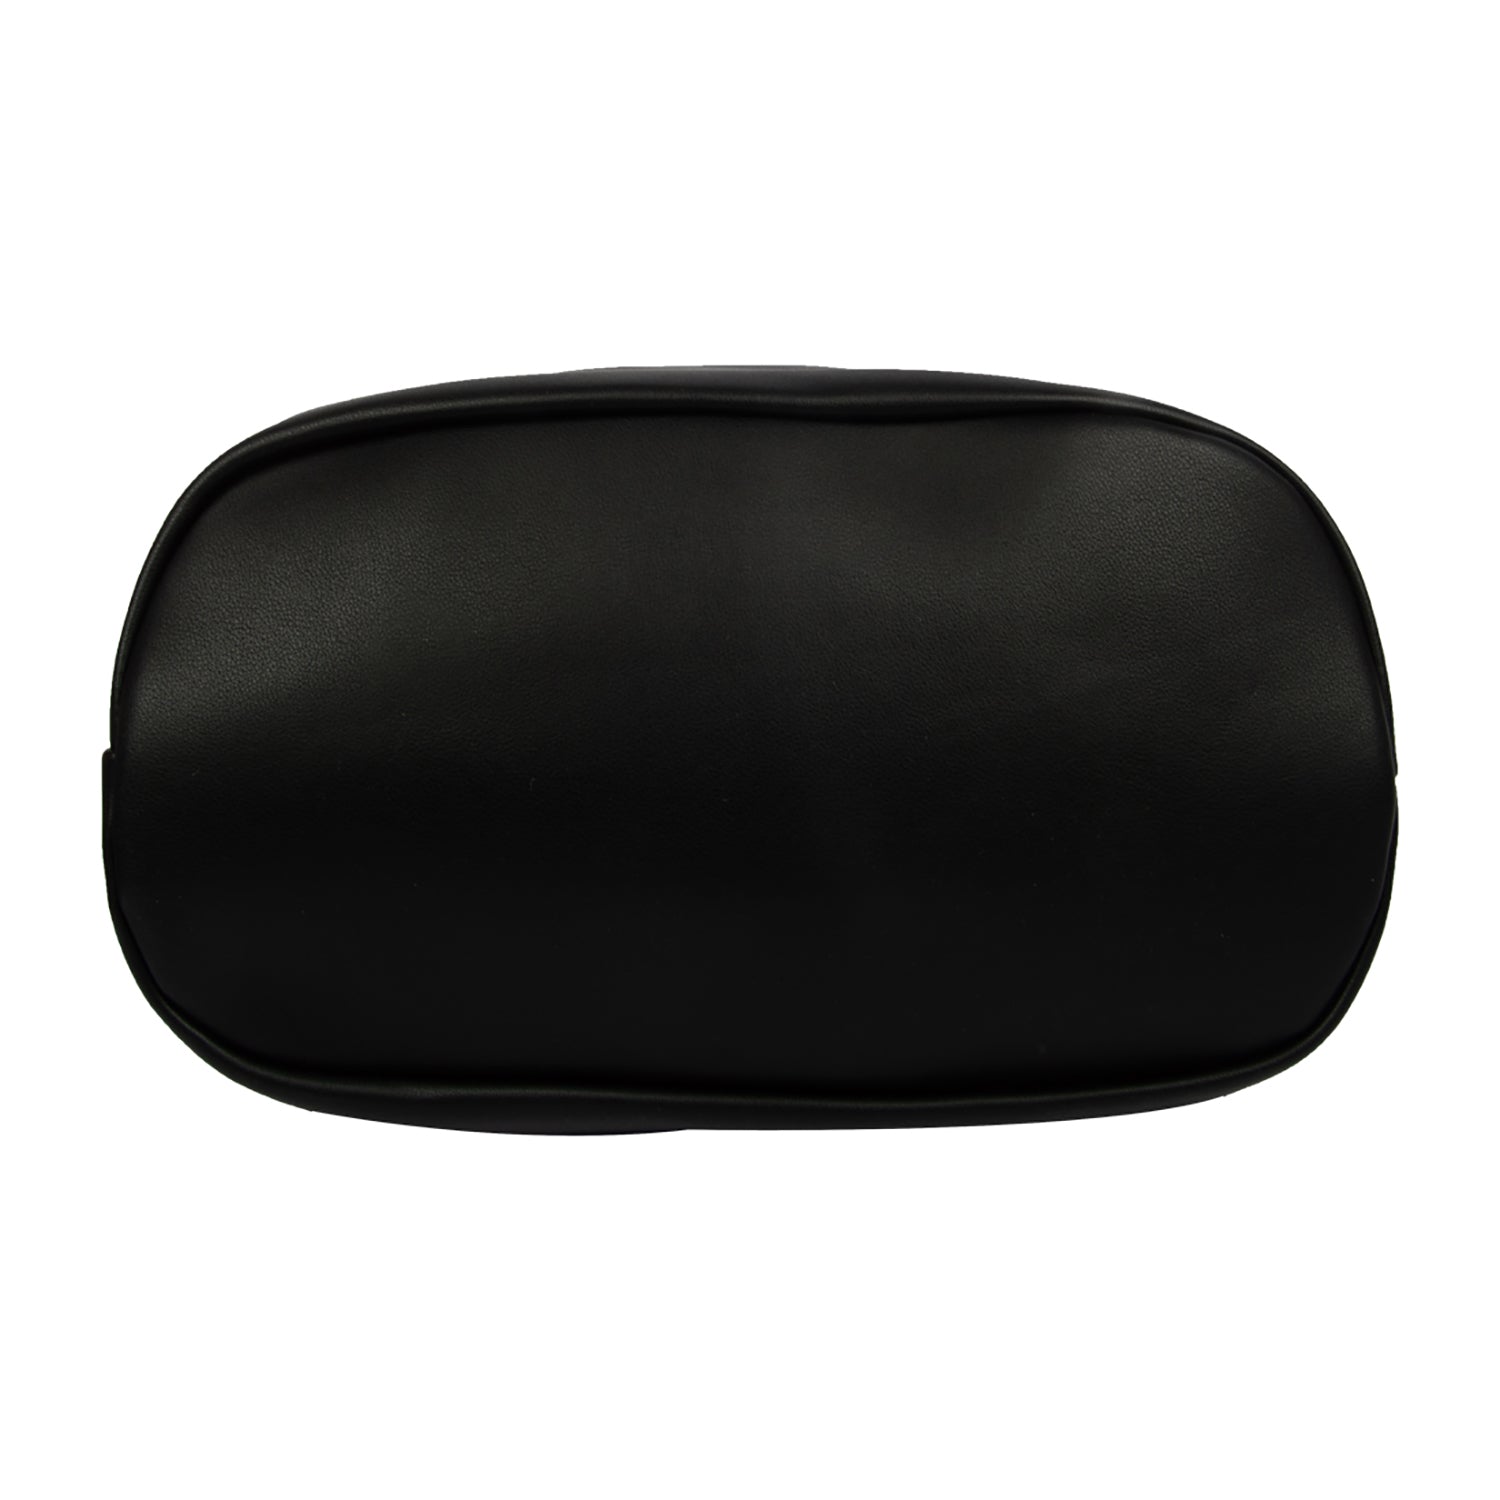 Bulchee Non Leather Ladies Black & White Shoulder Bag - HBPBN7016.1-19